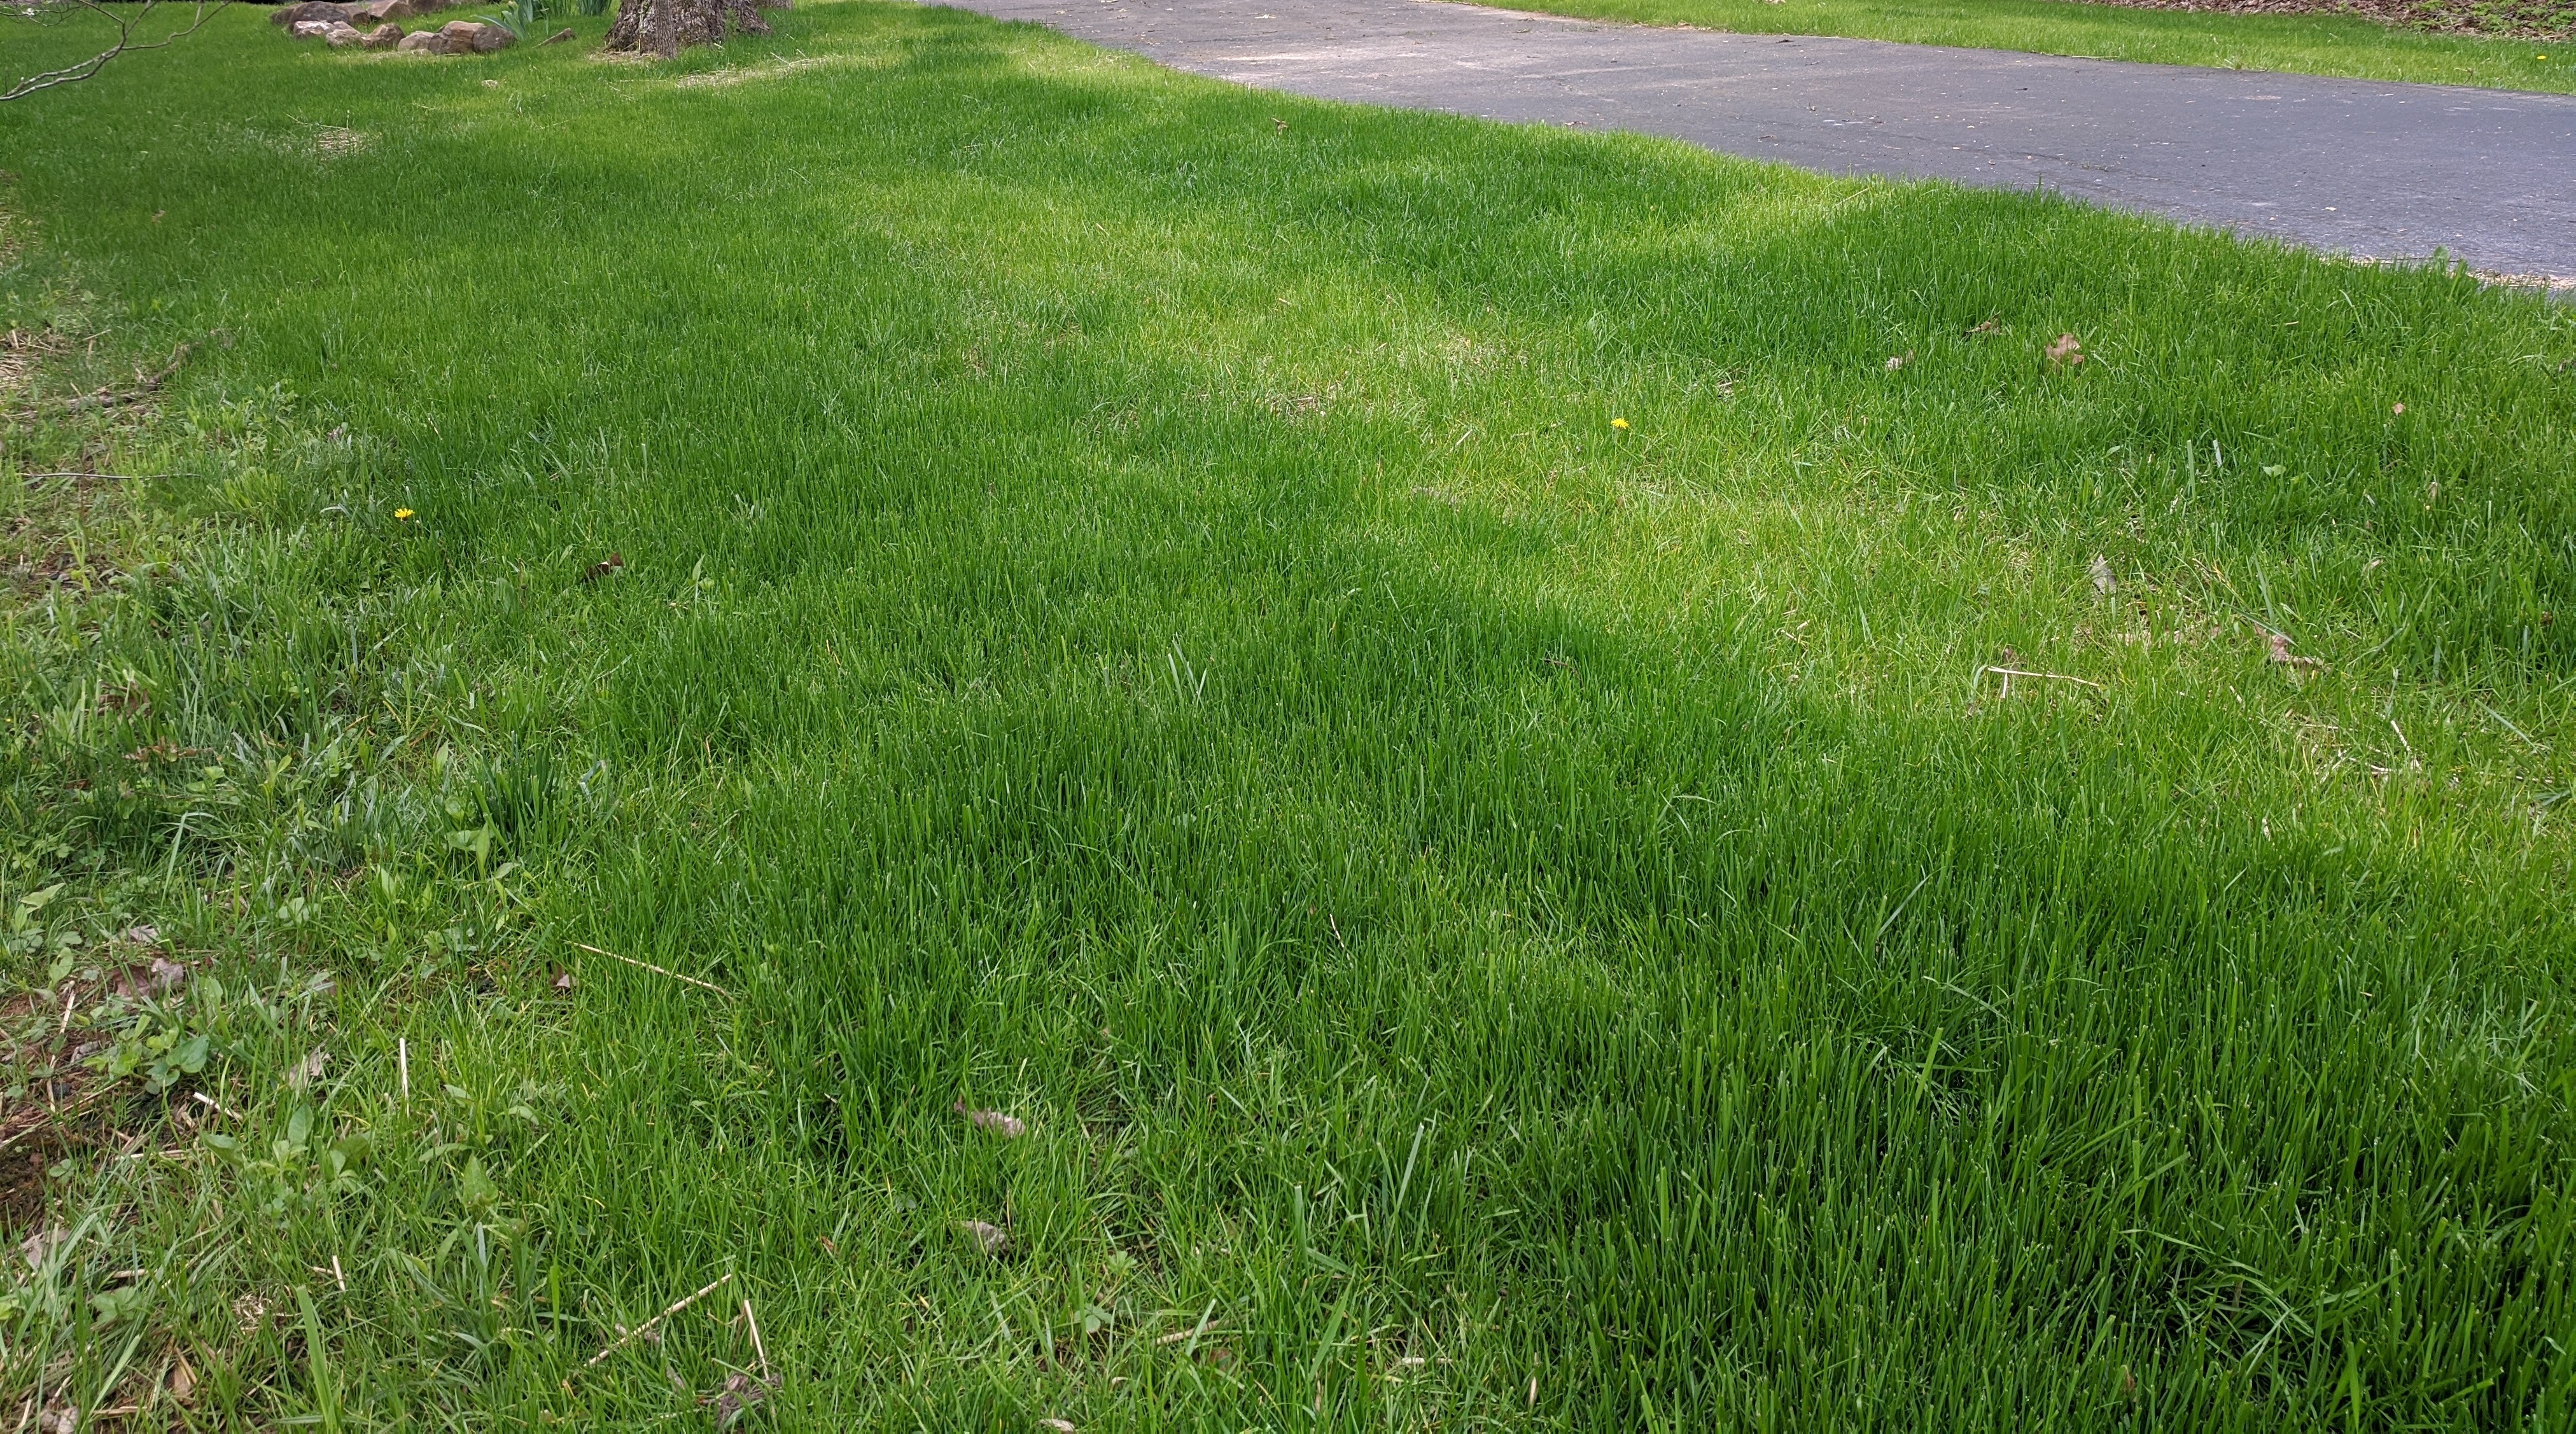 Figure 3: Actual grass